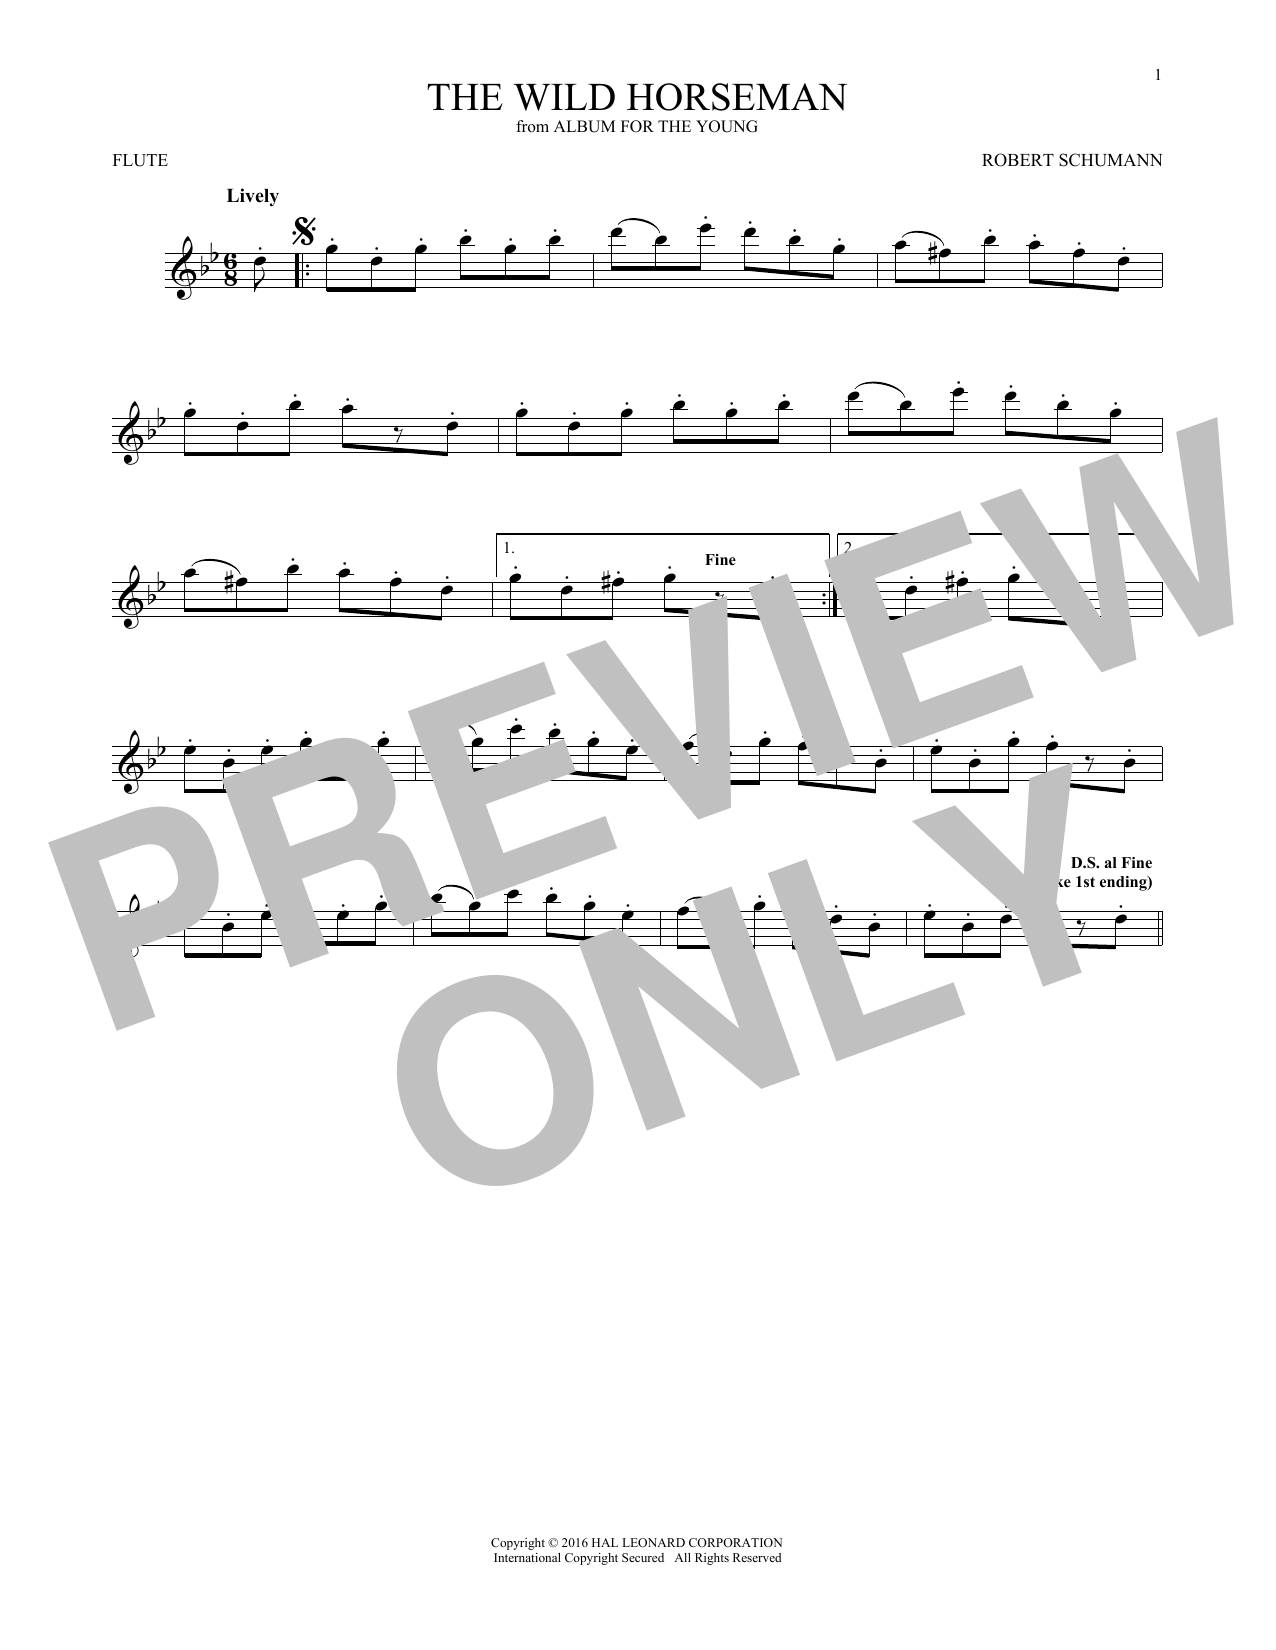 Robert Schumann The Wild Horseman (Wilder Reiter), Op. 68, No. 8 Sheet Music Notes & Chords for Tenor Saxophone - Download or Print PDF